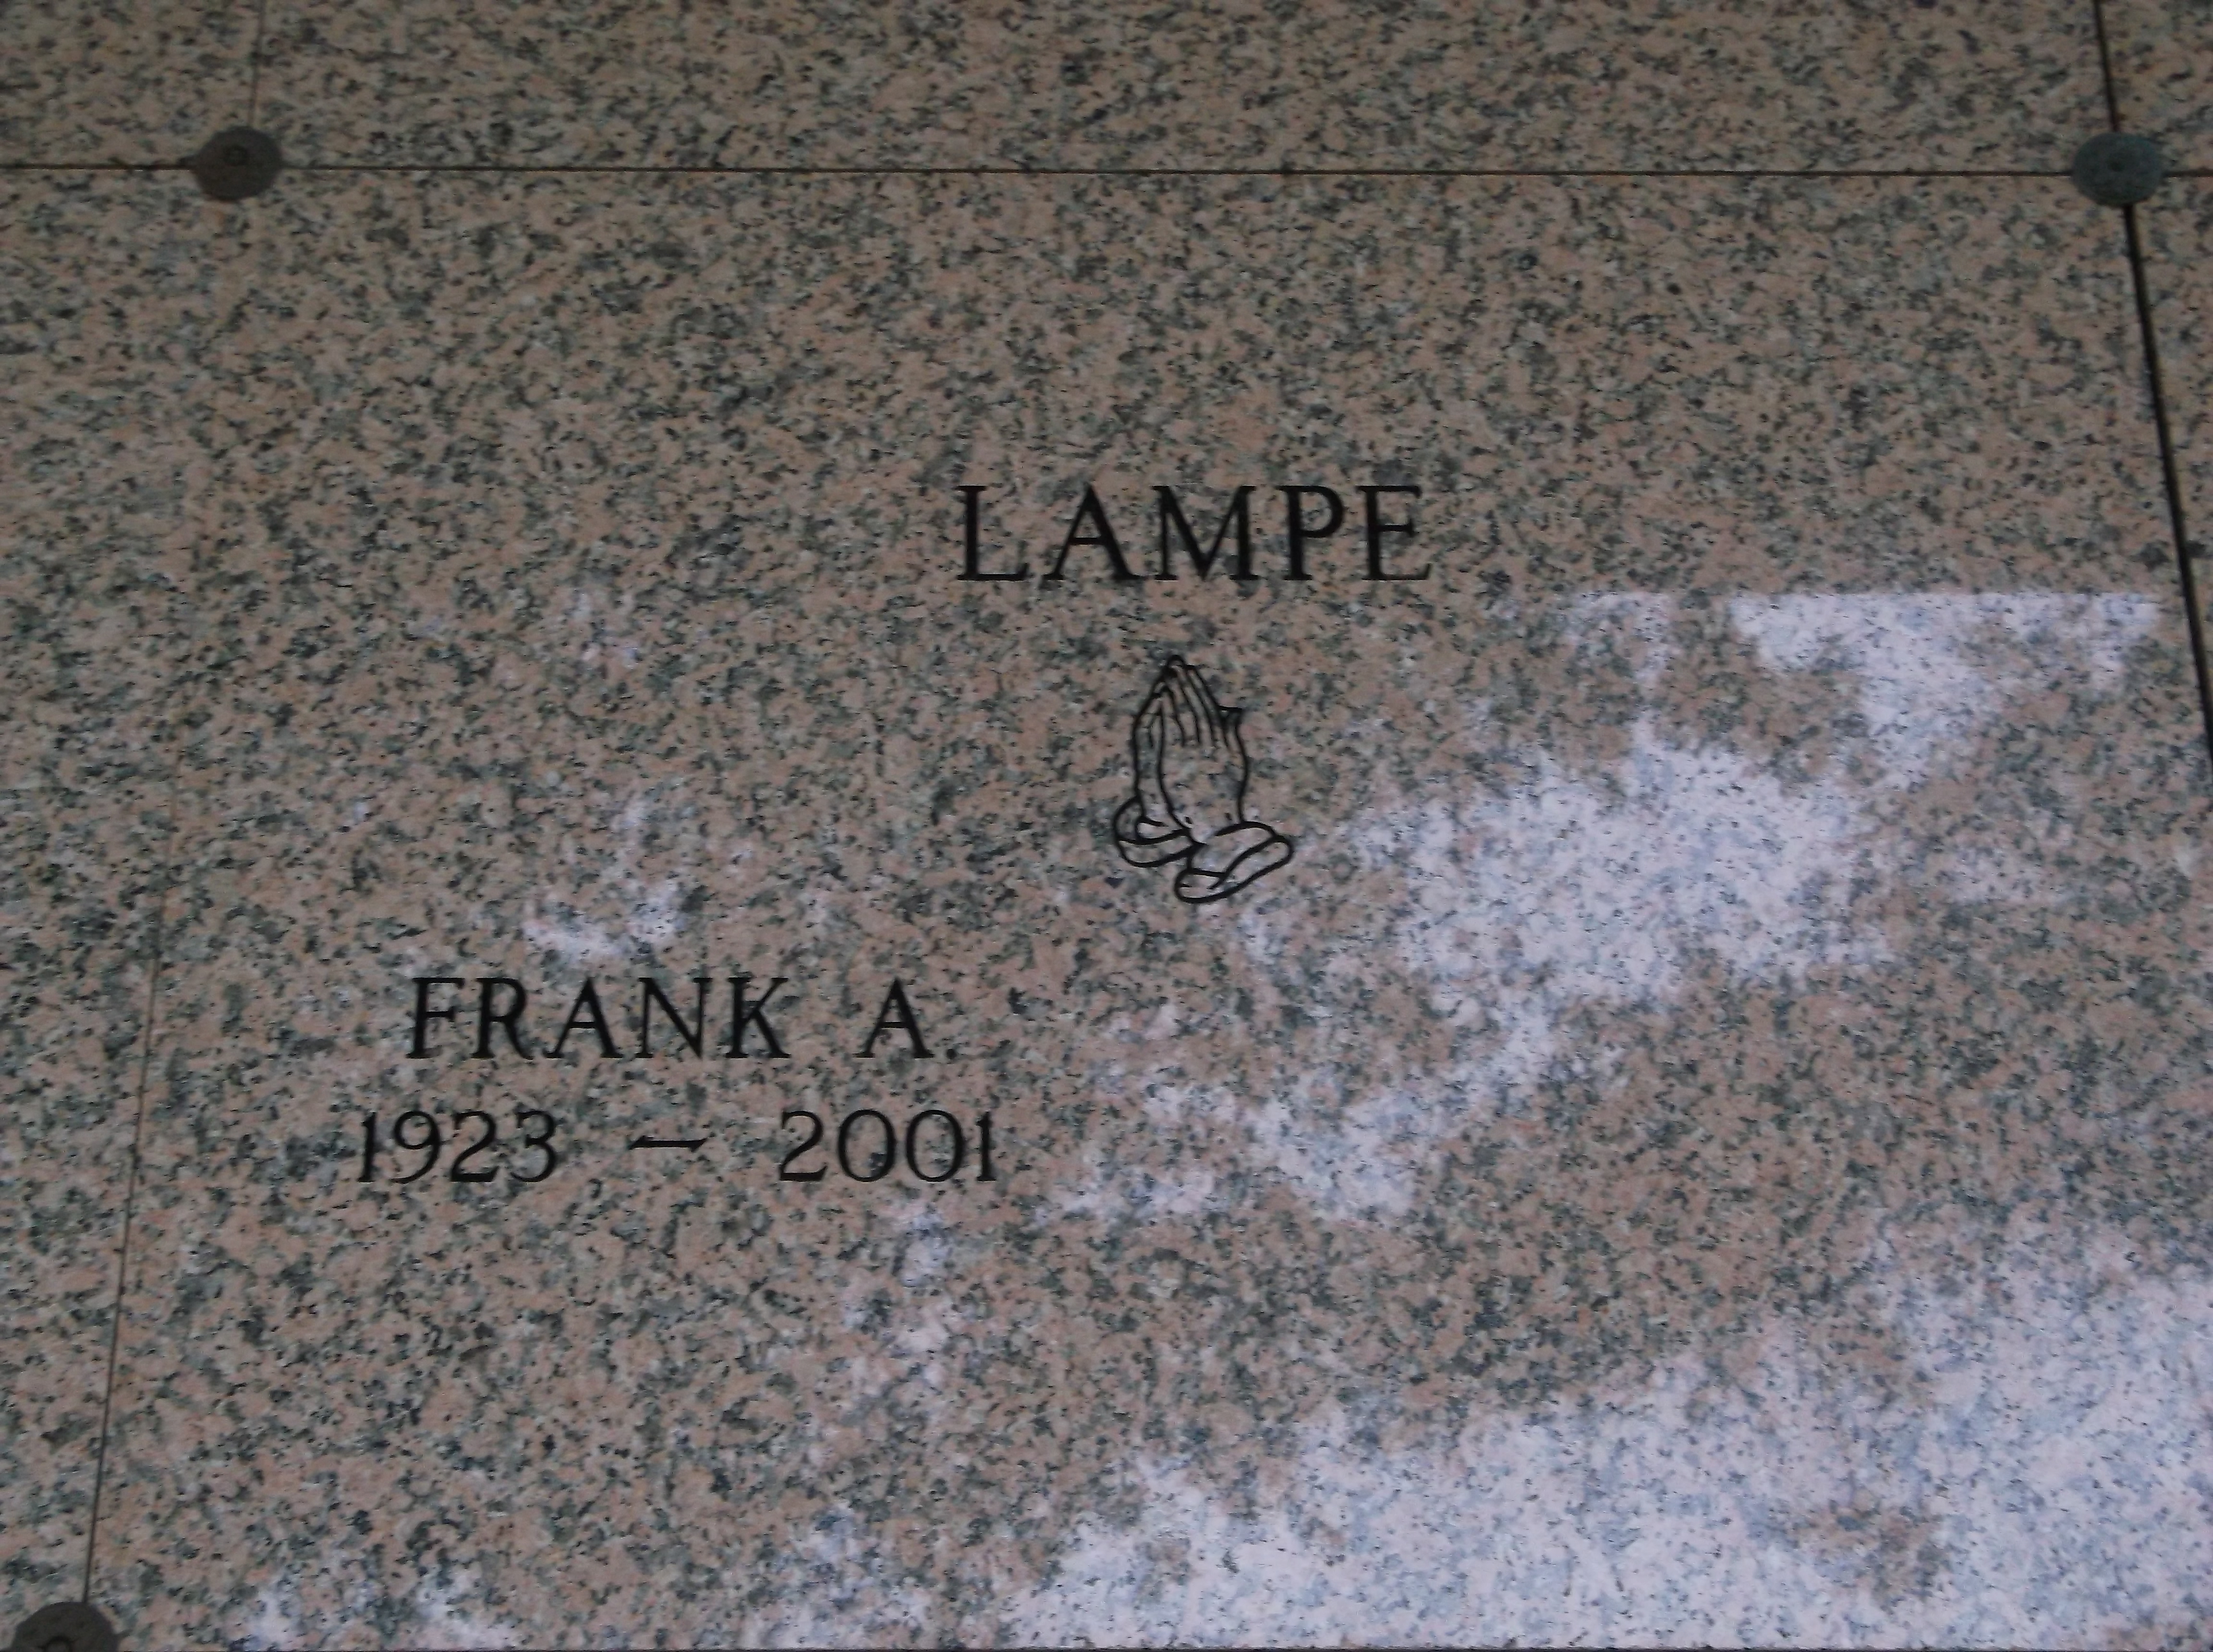 Frank A Lampe